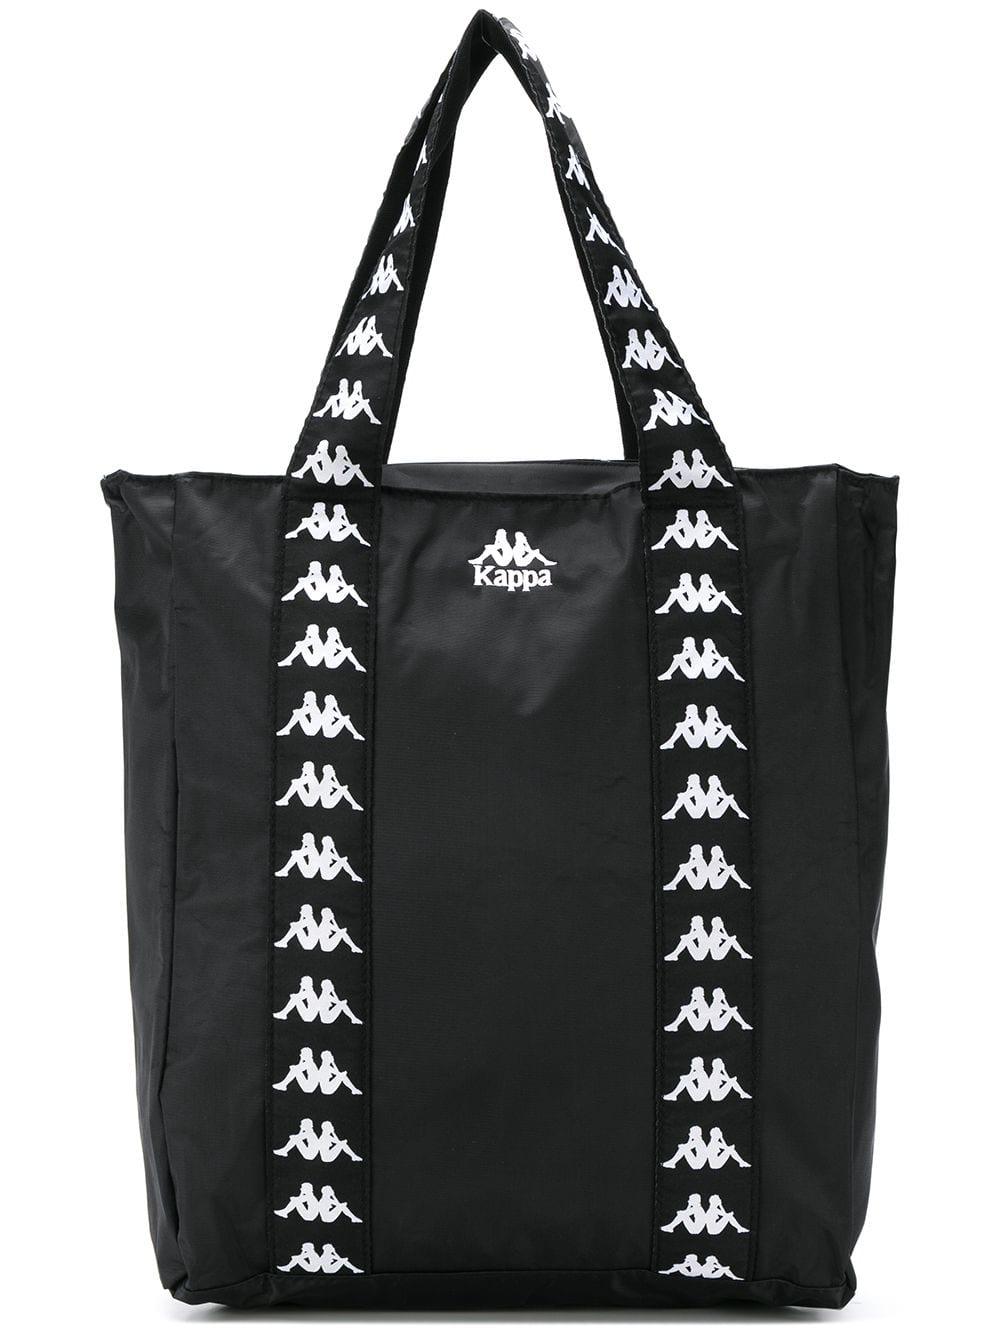 Kappa Synthetic Tote Bag in Black/White (Black) for Men | Lyst